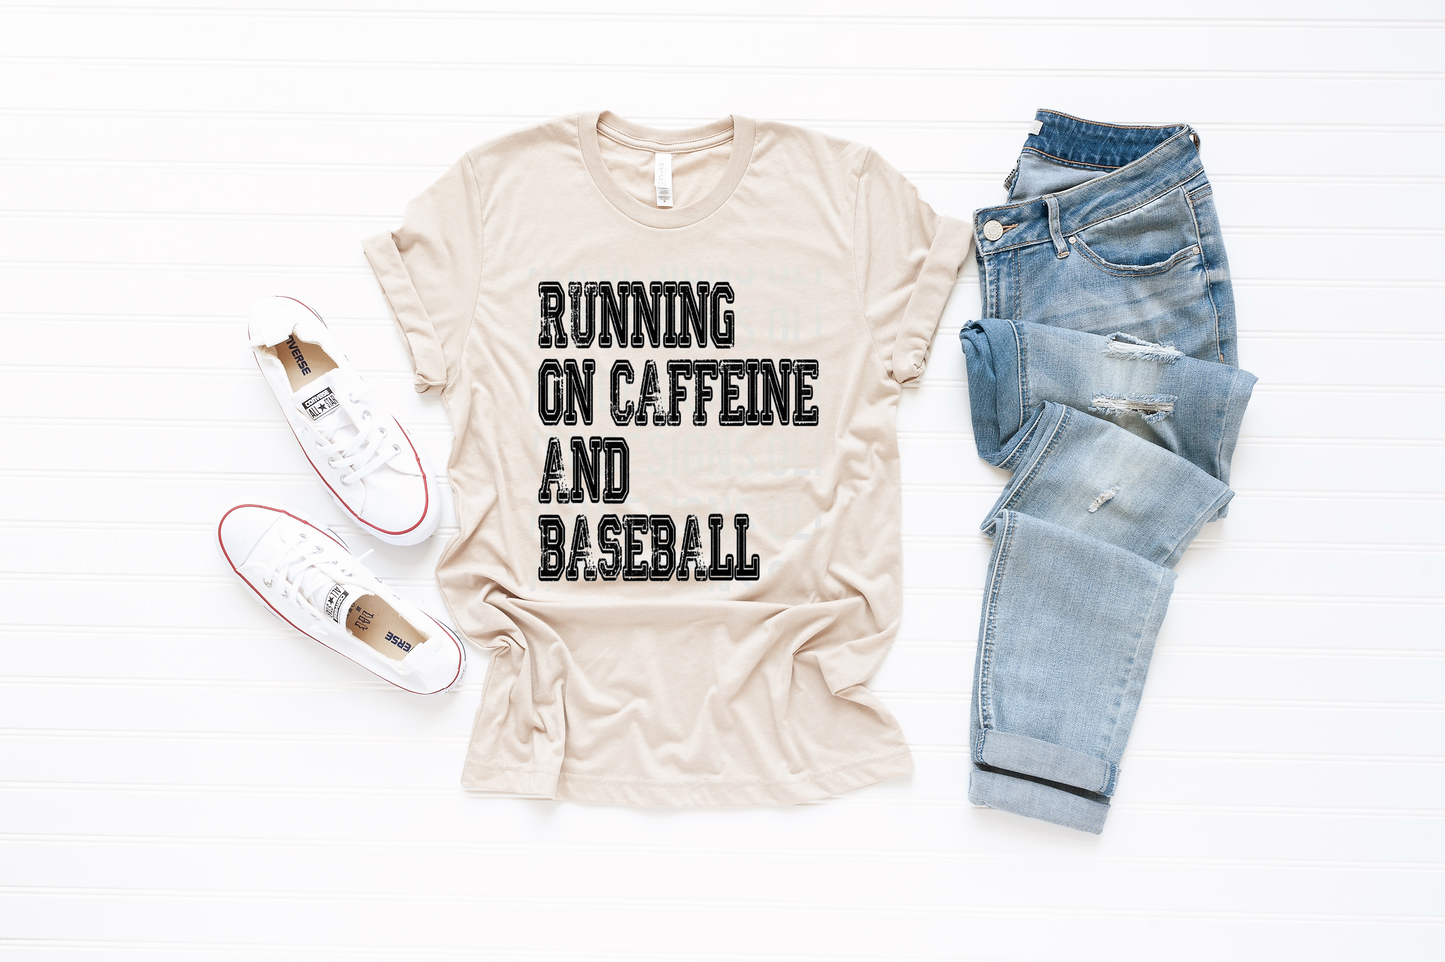 Running on caffeine and baseball tee